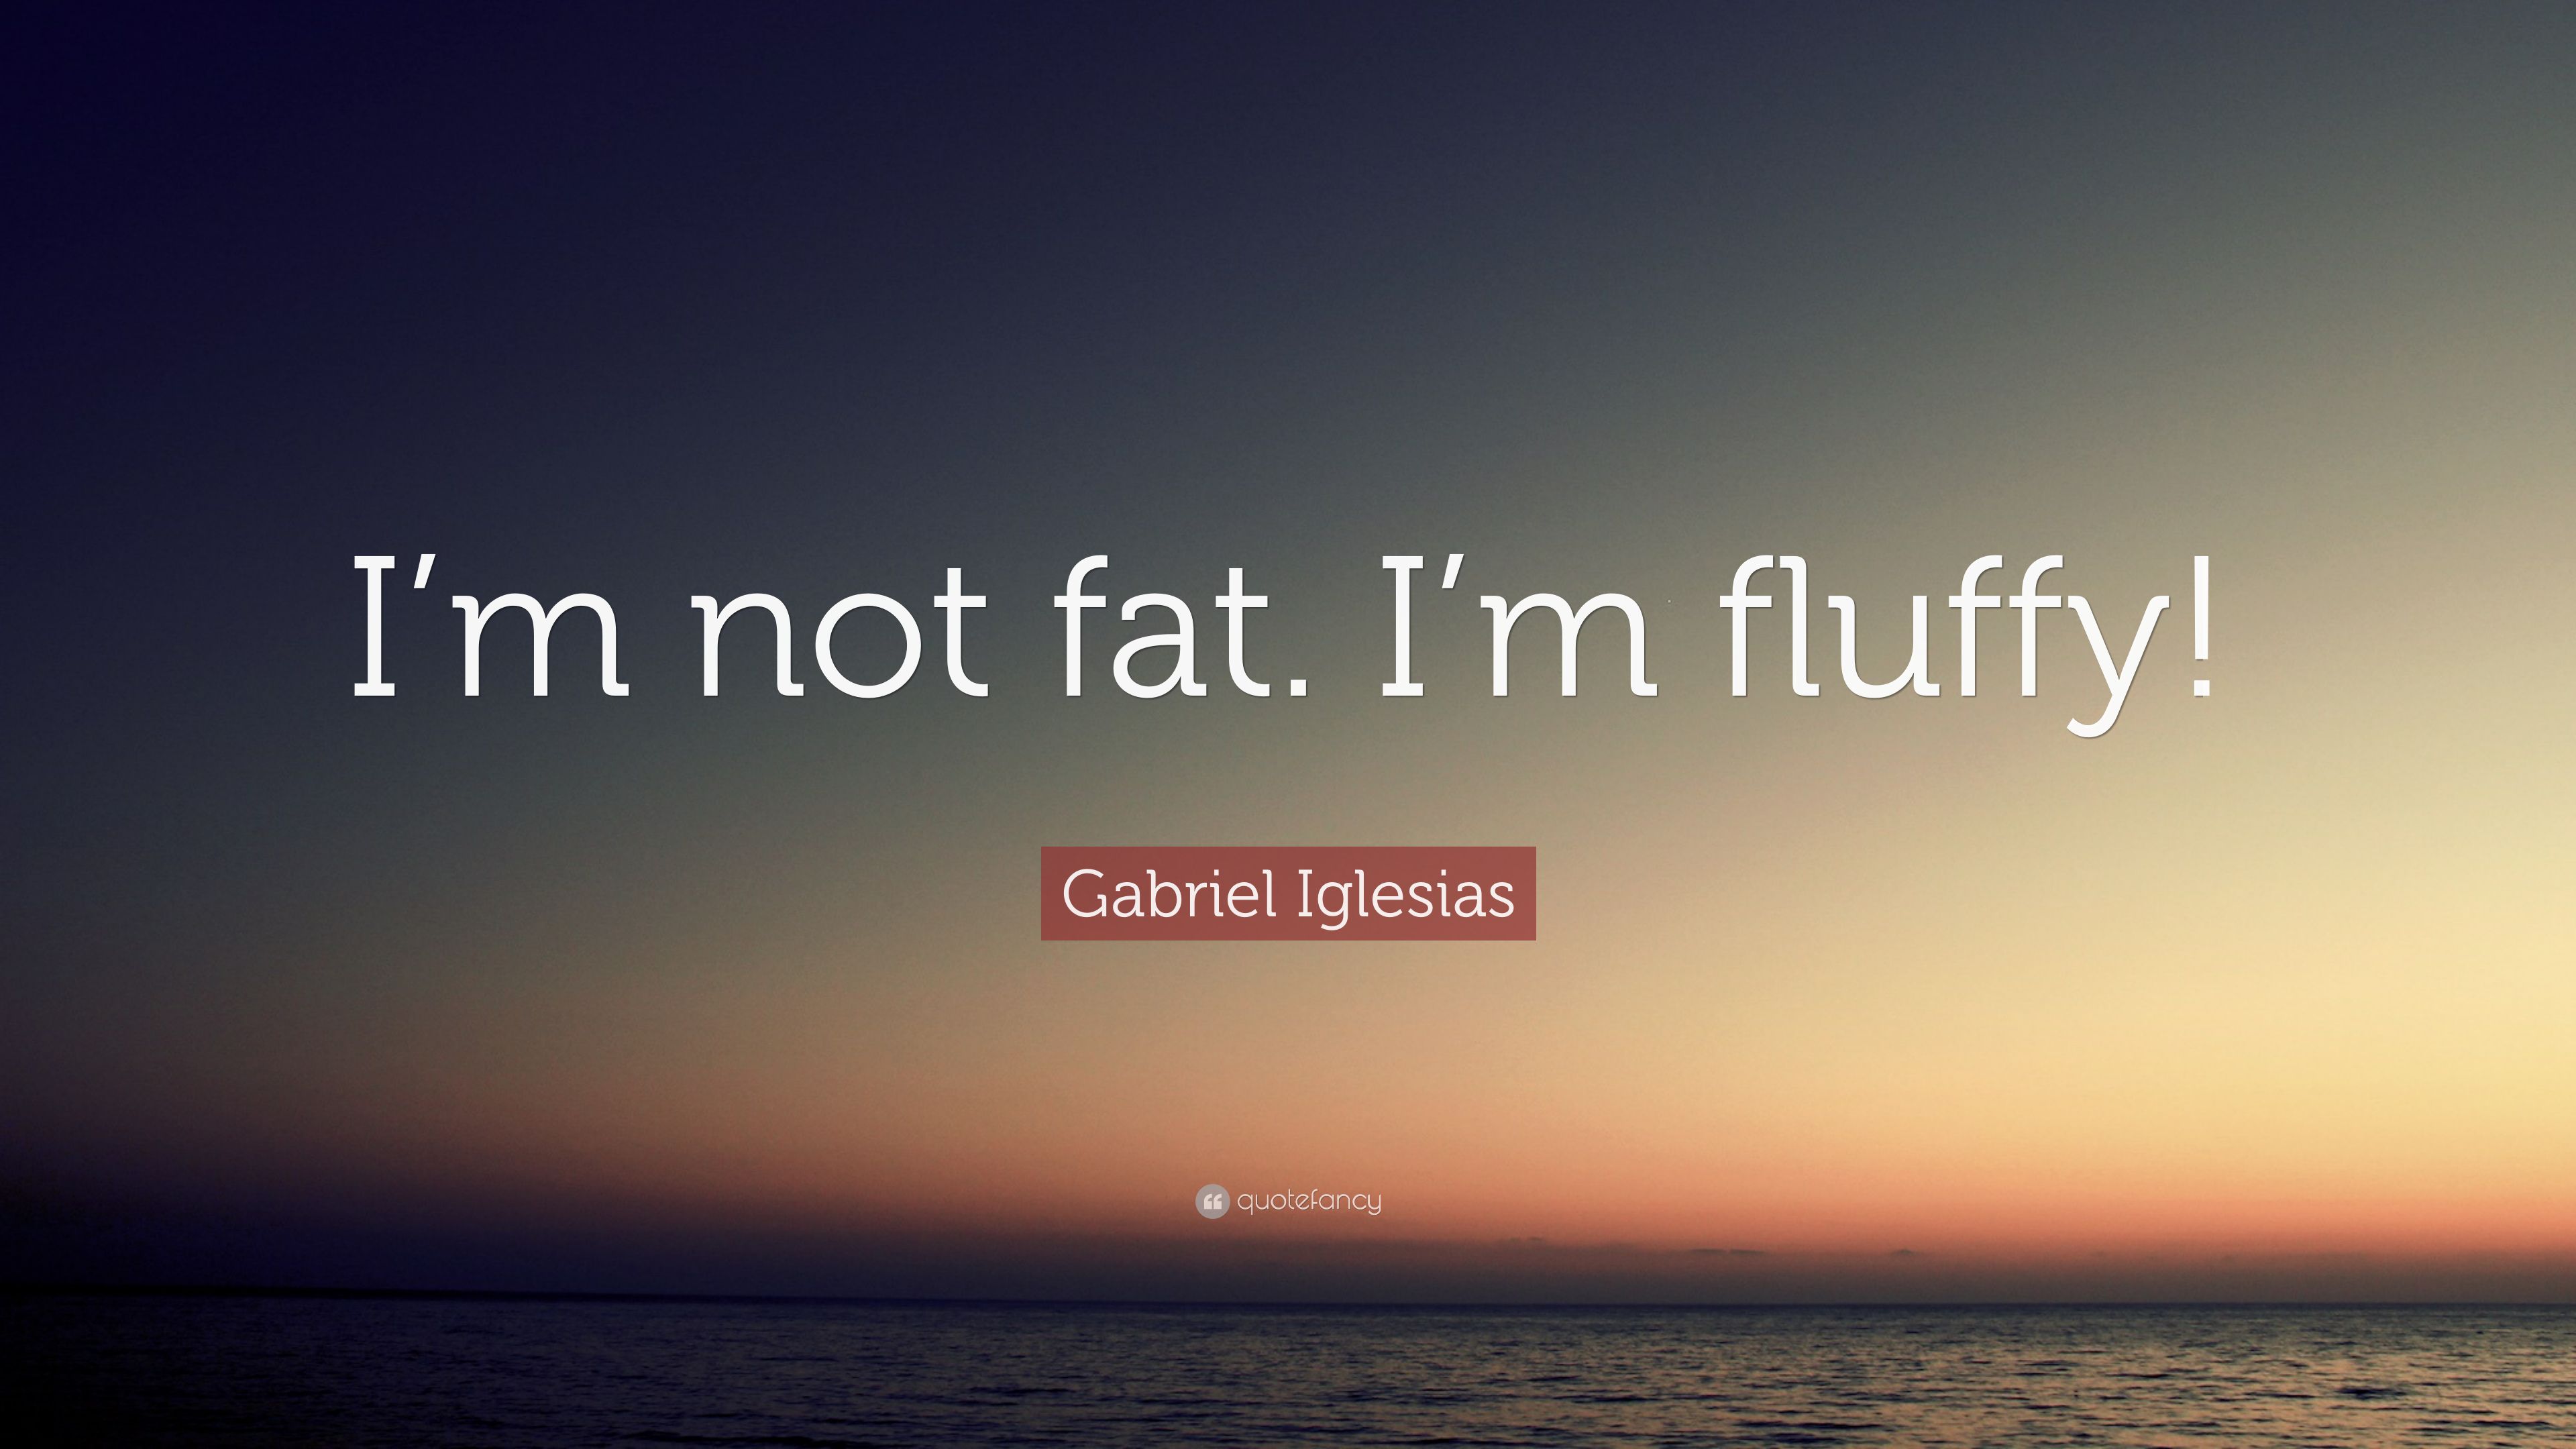 Gabriel Iglesias Quote: “I'm not fat. I'm fluffy!” (7 wallpaper)